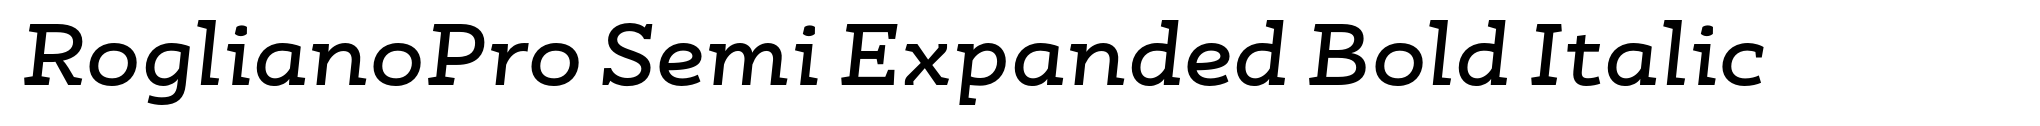 RoglianoPro Semi Expanded Bold Italic image